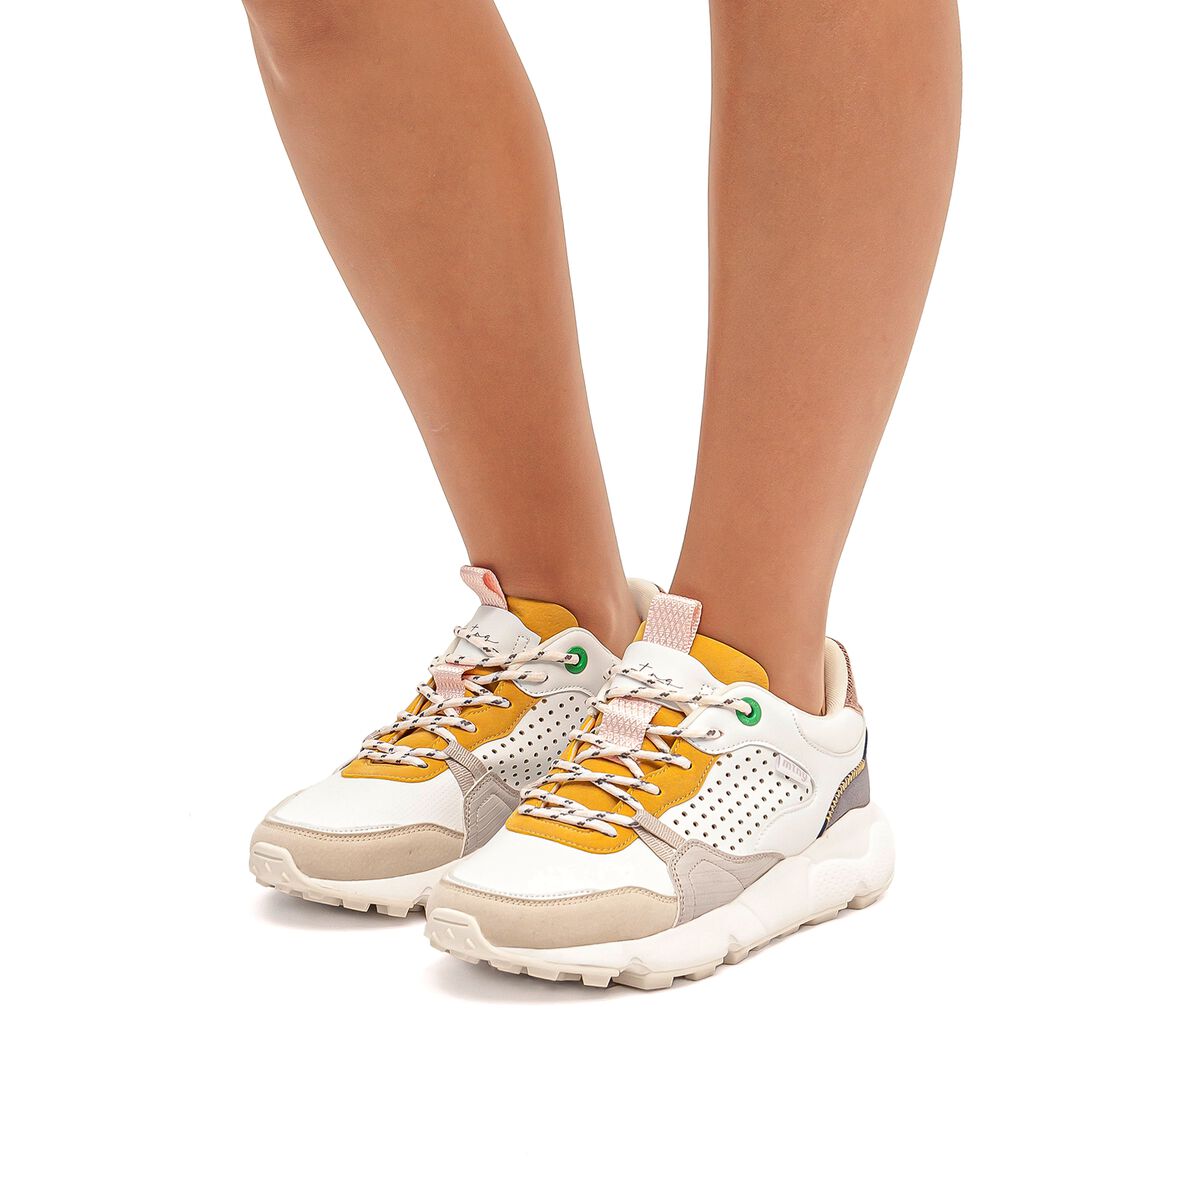 Zapatillas de Mujer modelo CLIMB de MTNG image number 1